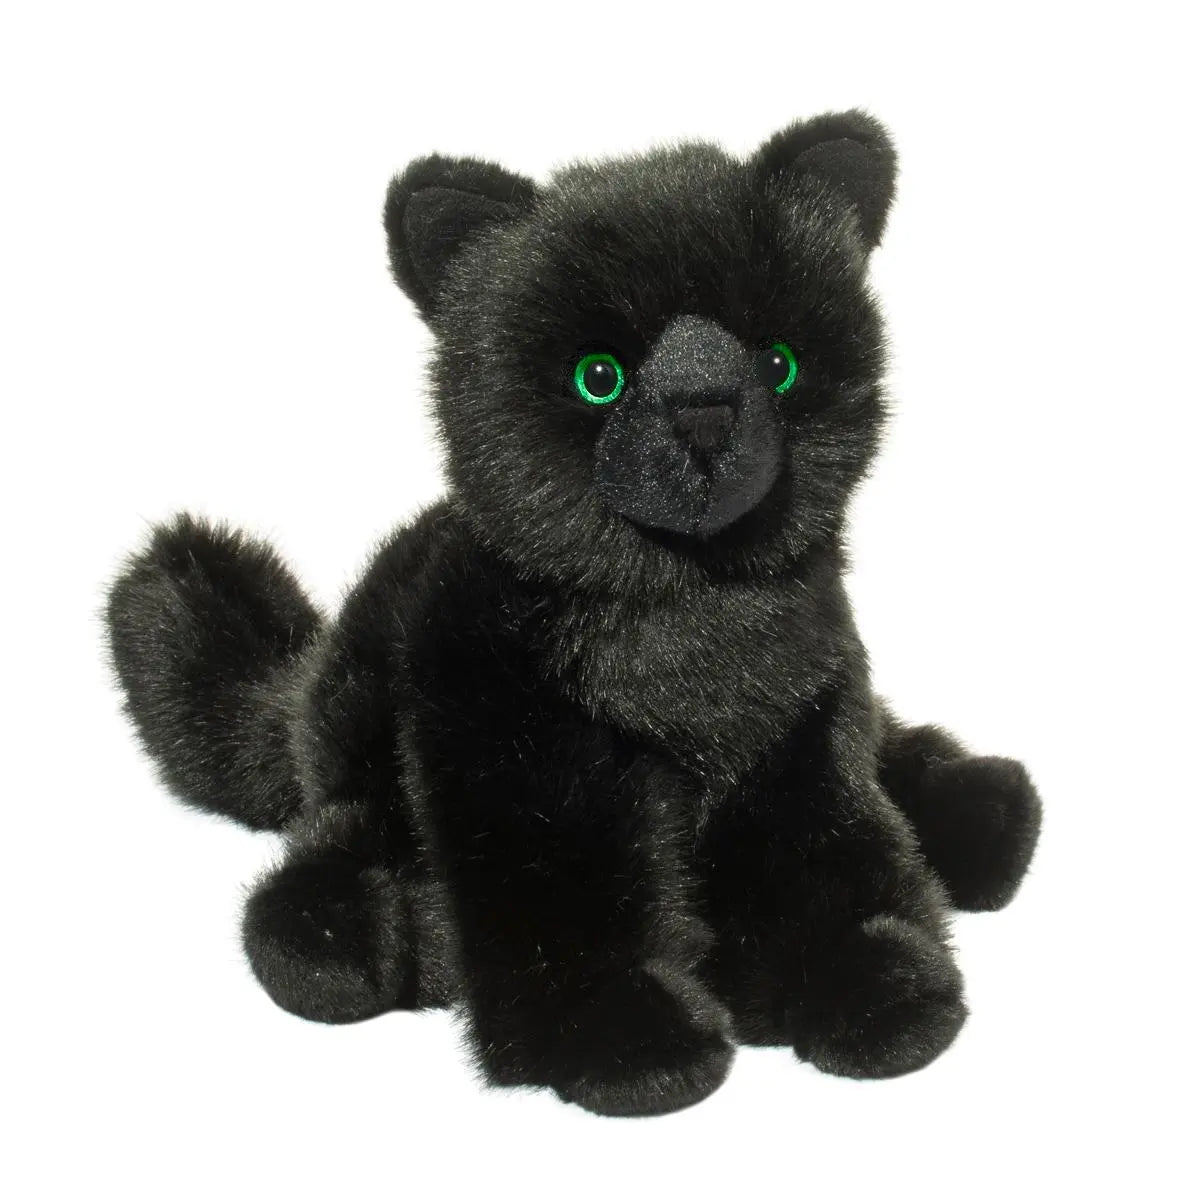 Salem the Black Cat Plush Animal